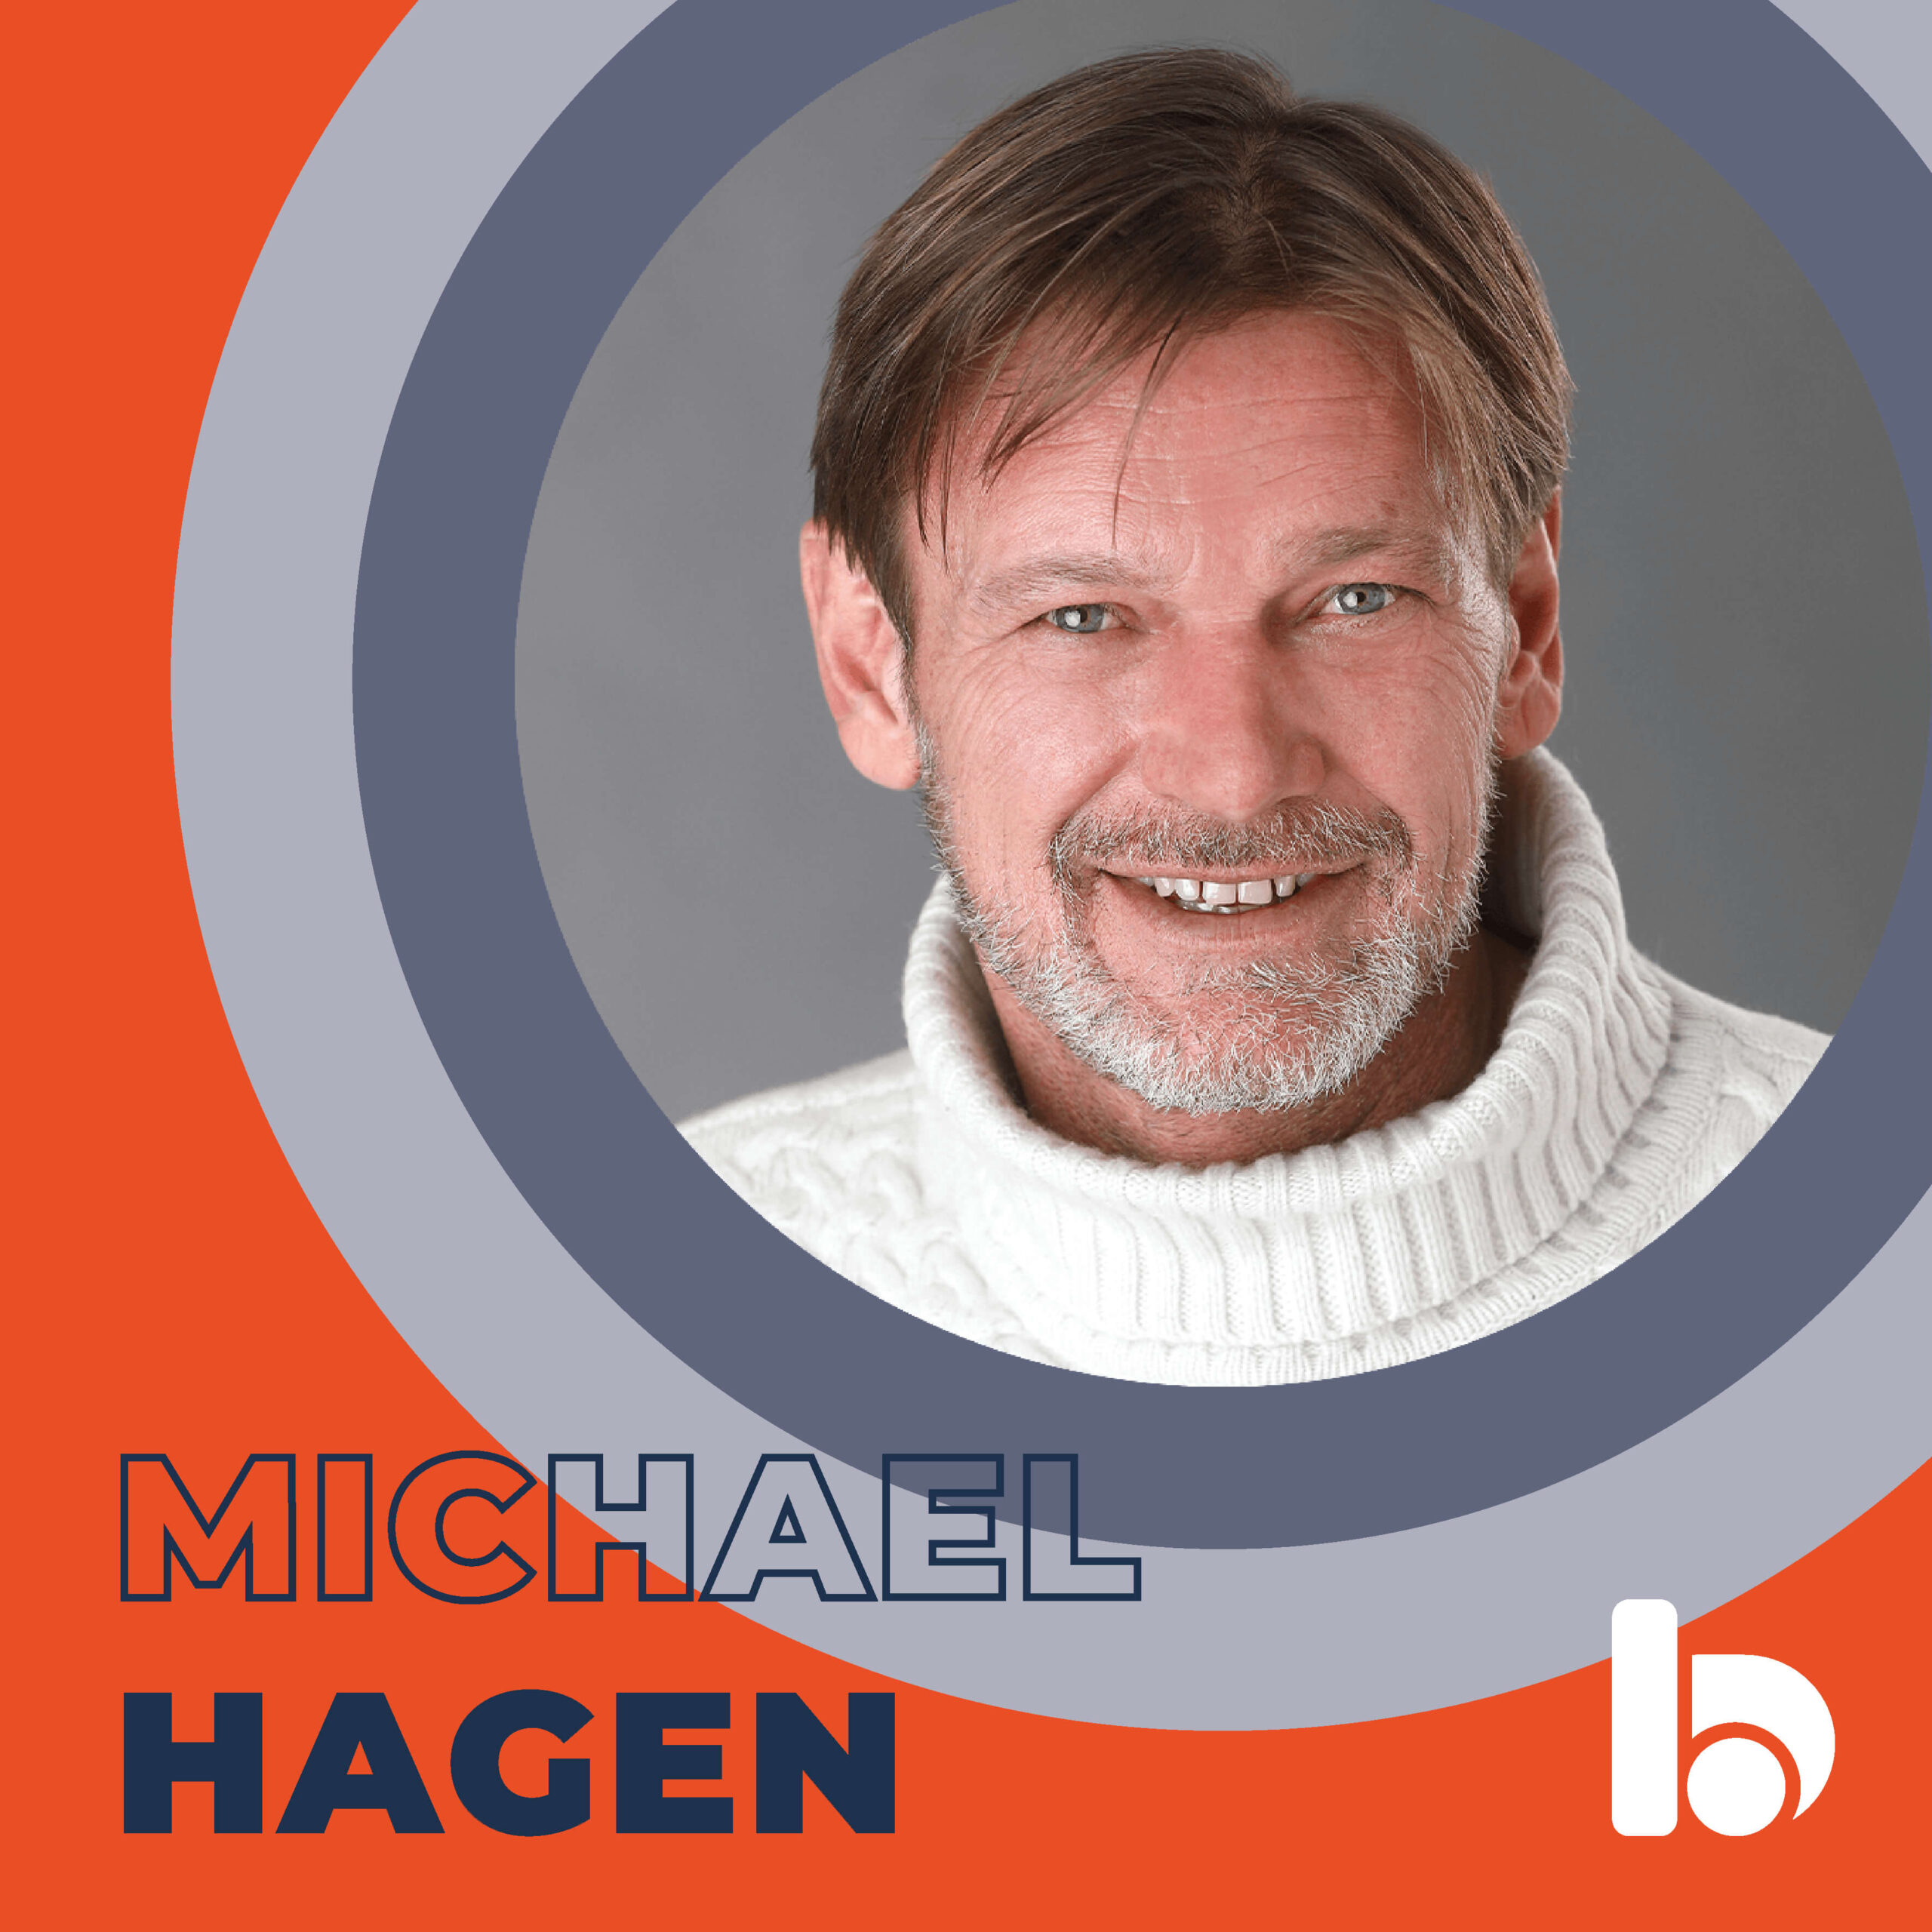 #BENSEGGEREMPLOYEE: MICHAEL HAGEN